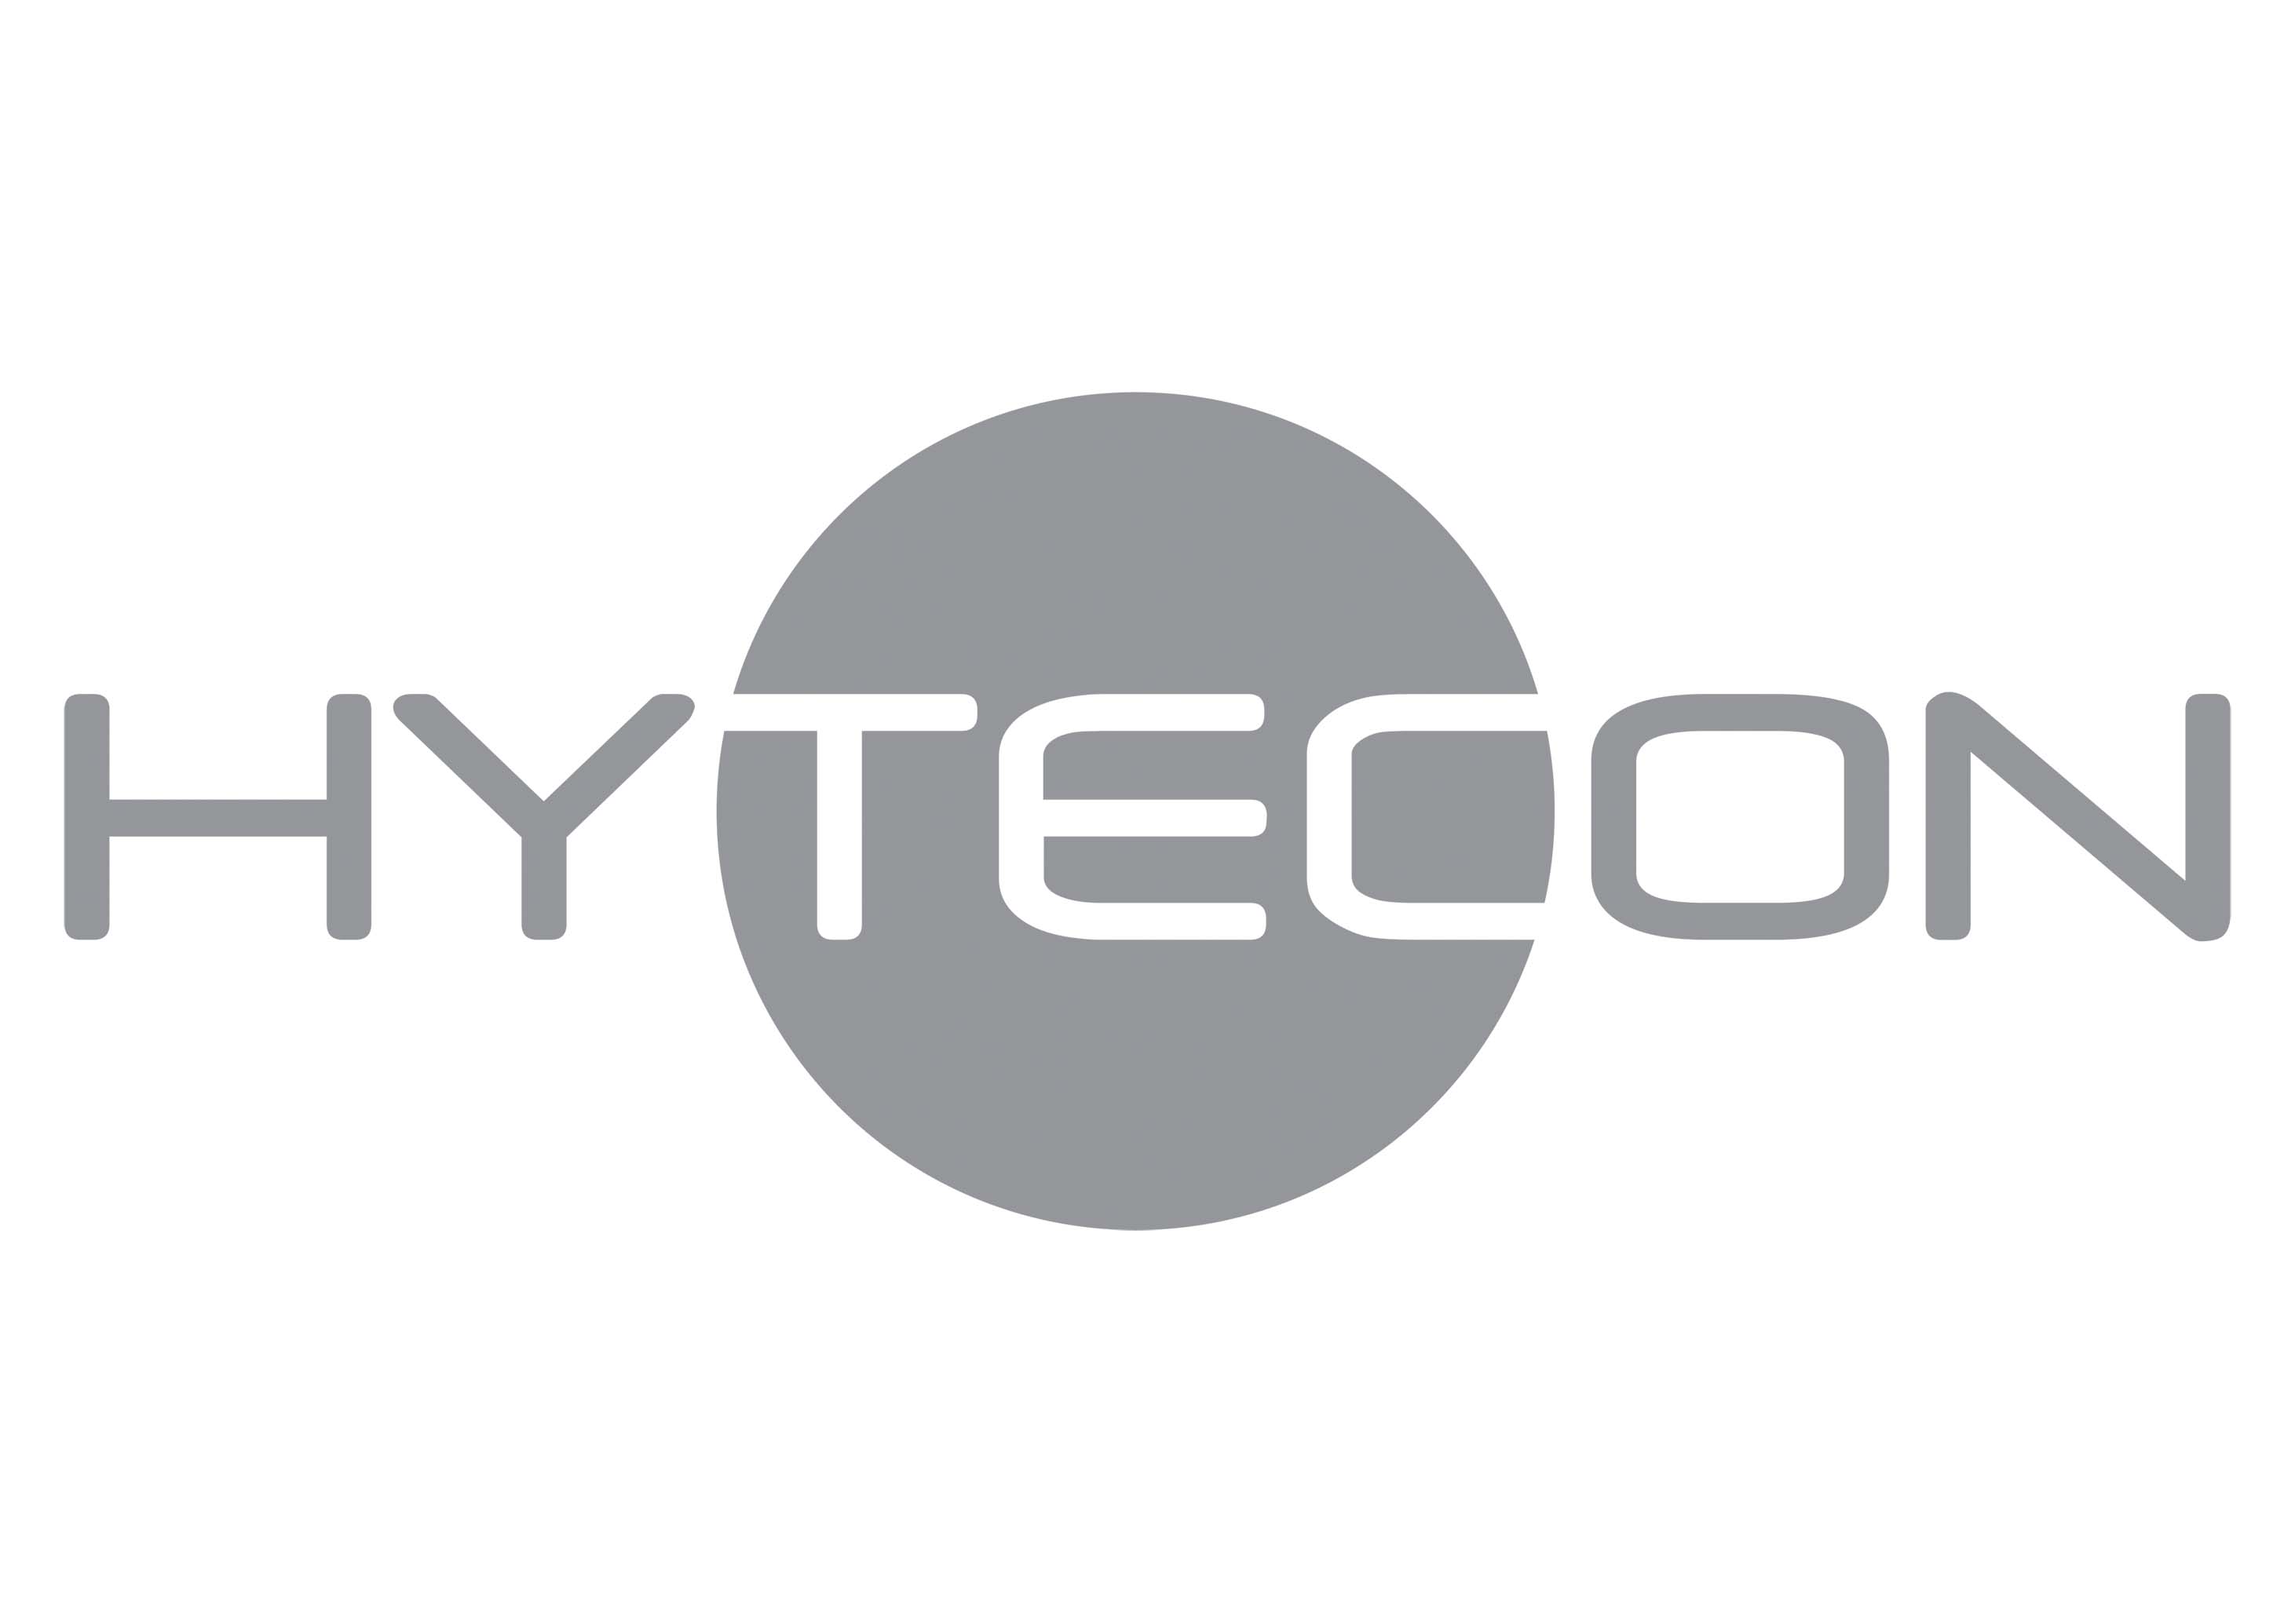 Hytecon Coupons & Promo Codes